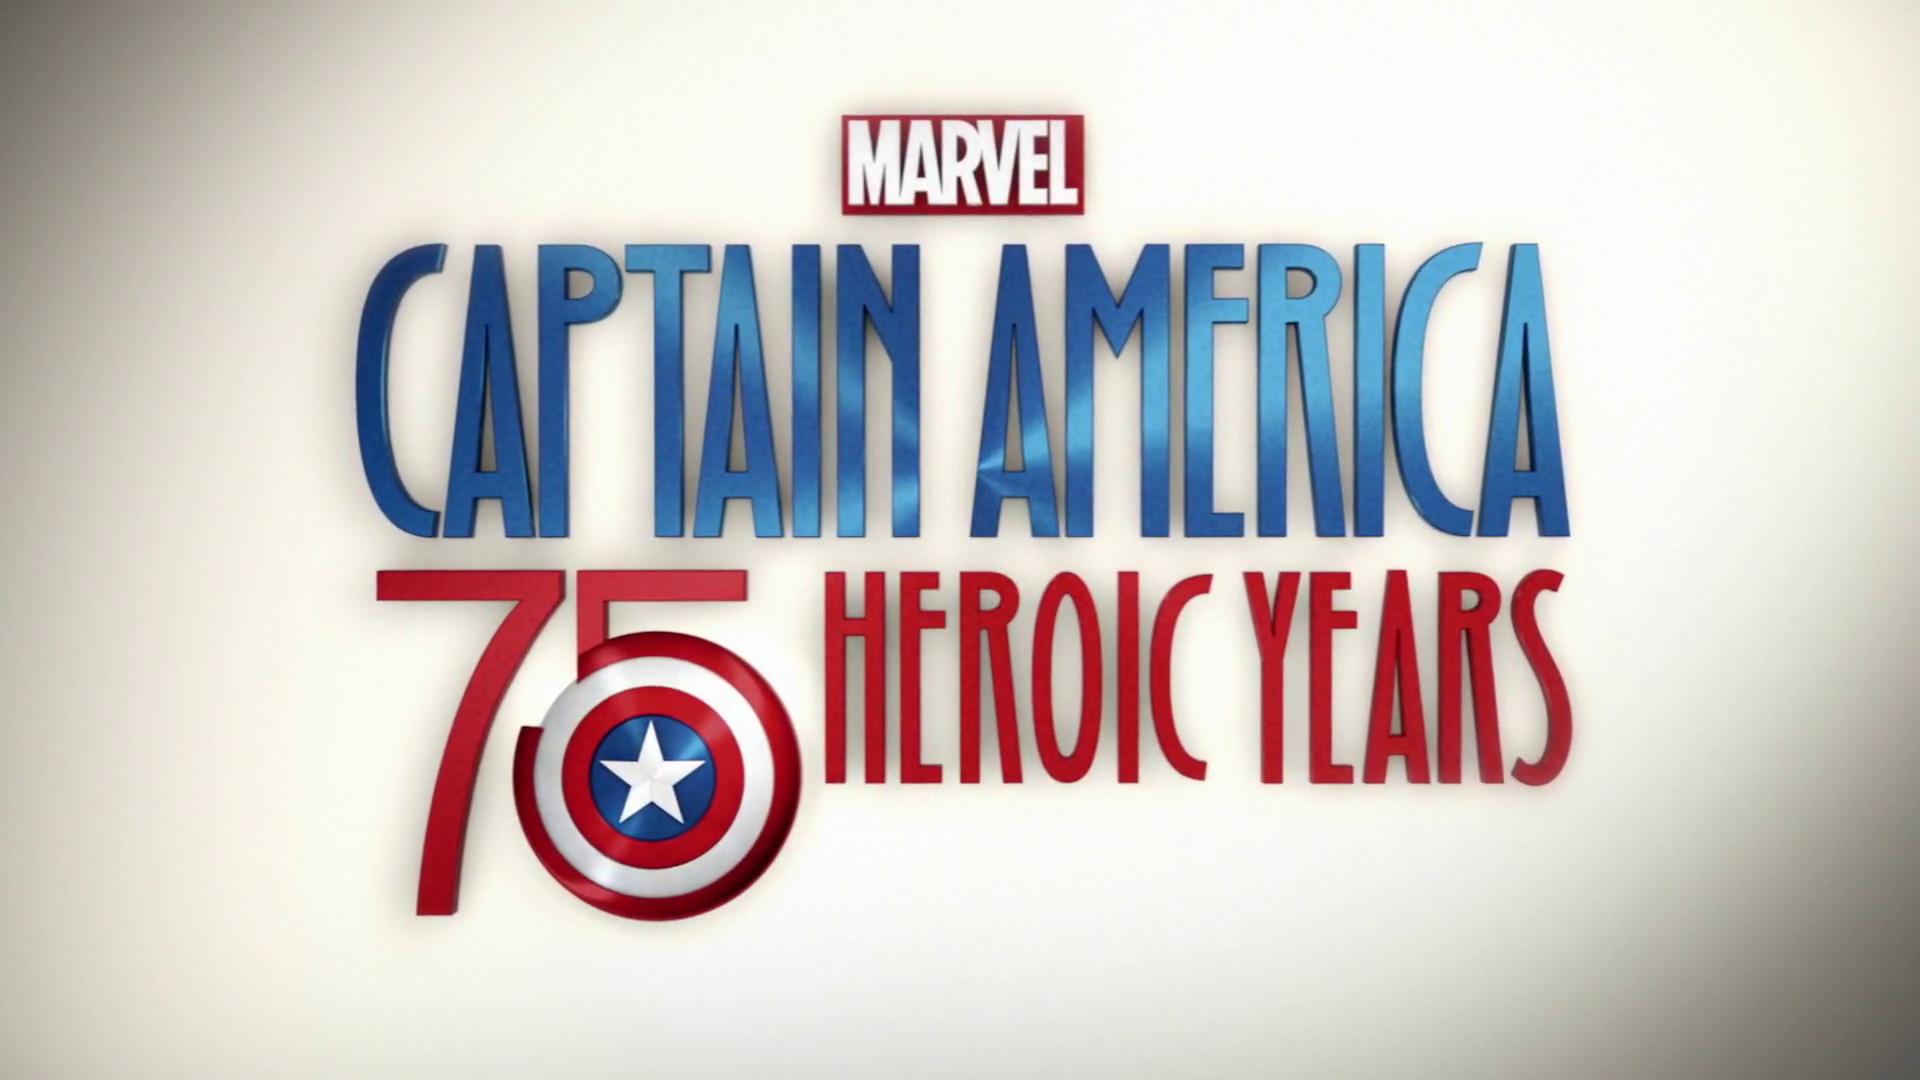 Captain America 75 Heroic Years Marvel Cinematic